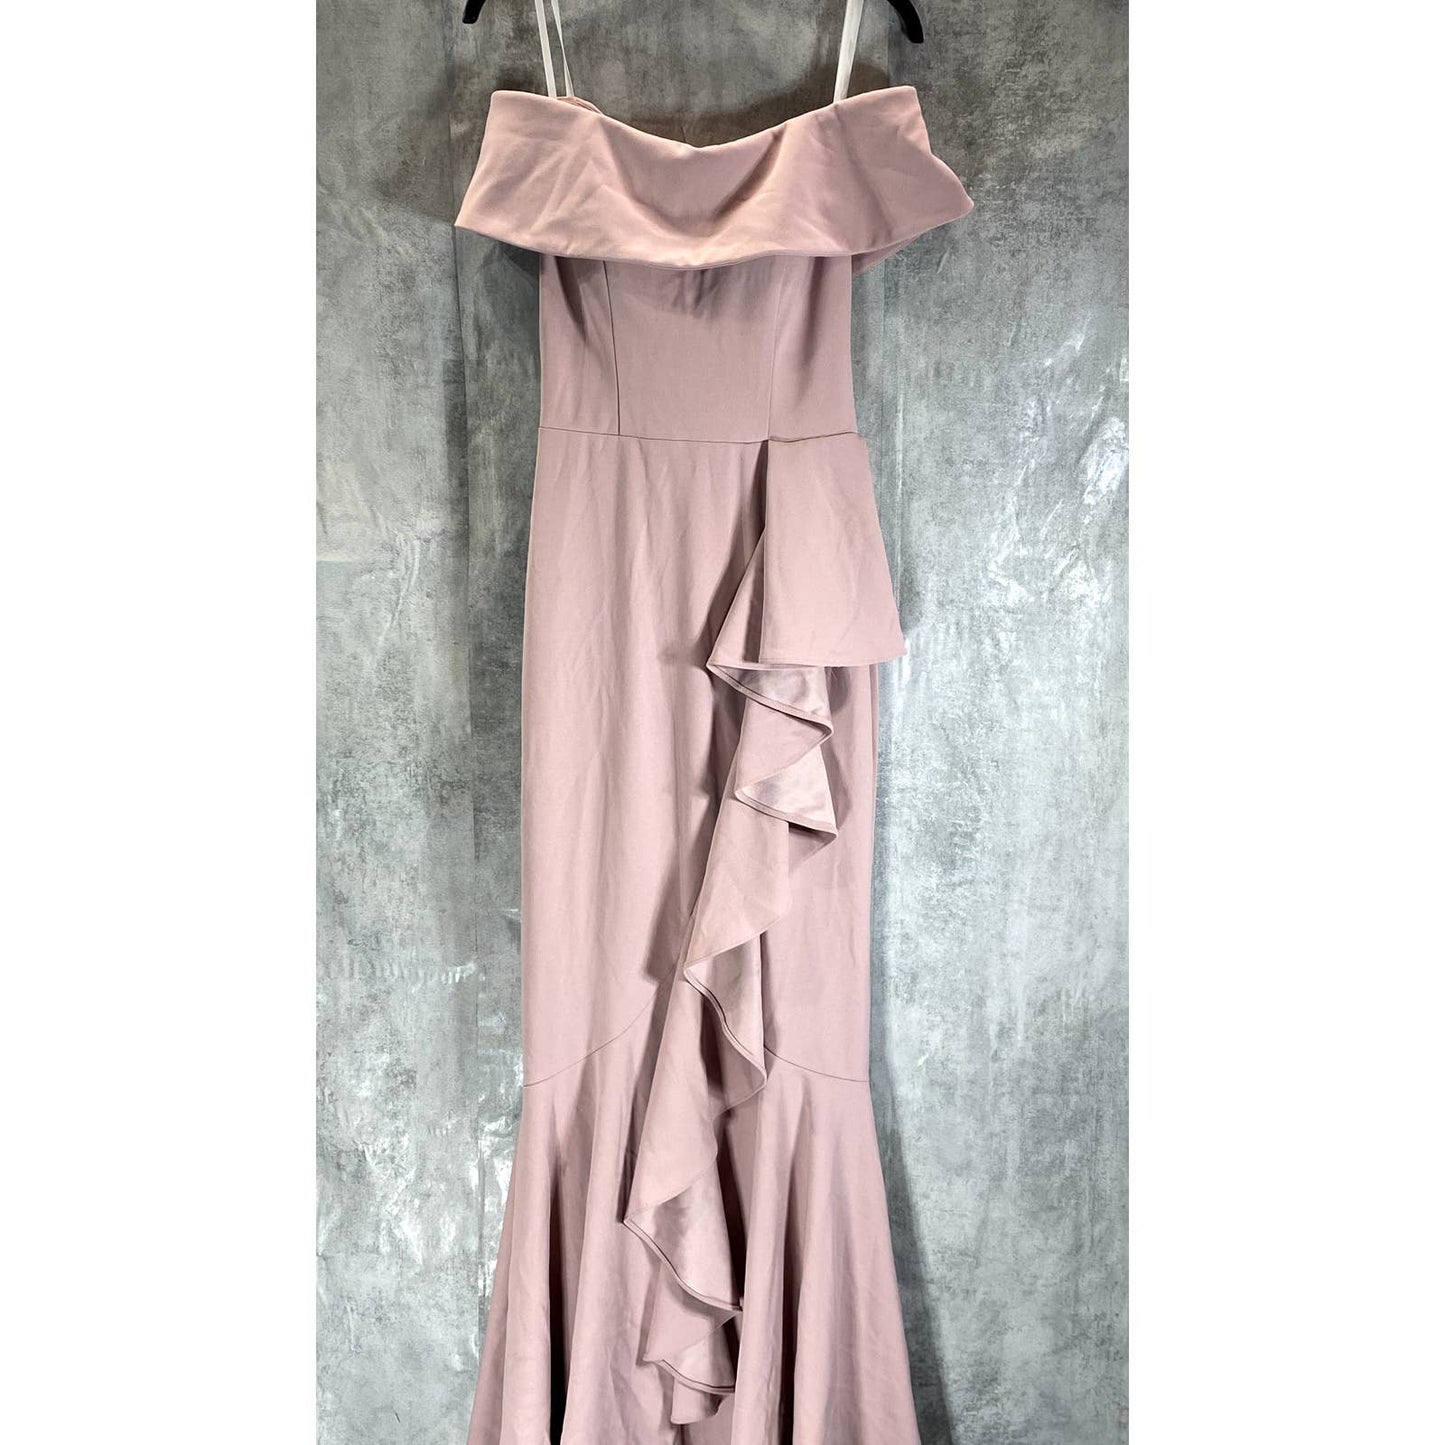 BETSY & ADAM Women's Light Pink Cascade Ruffle Off-The-Shoulder Mermaid Gown SZ4